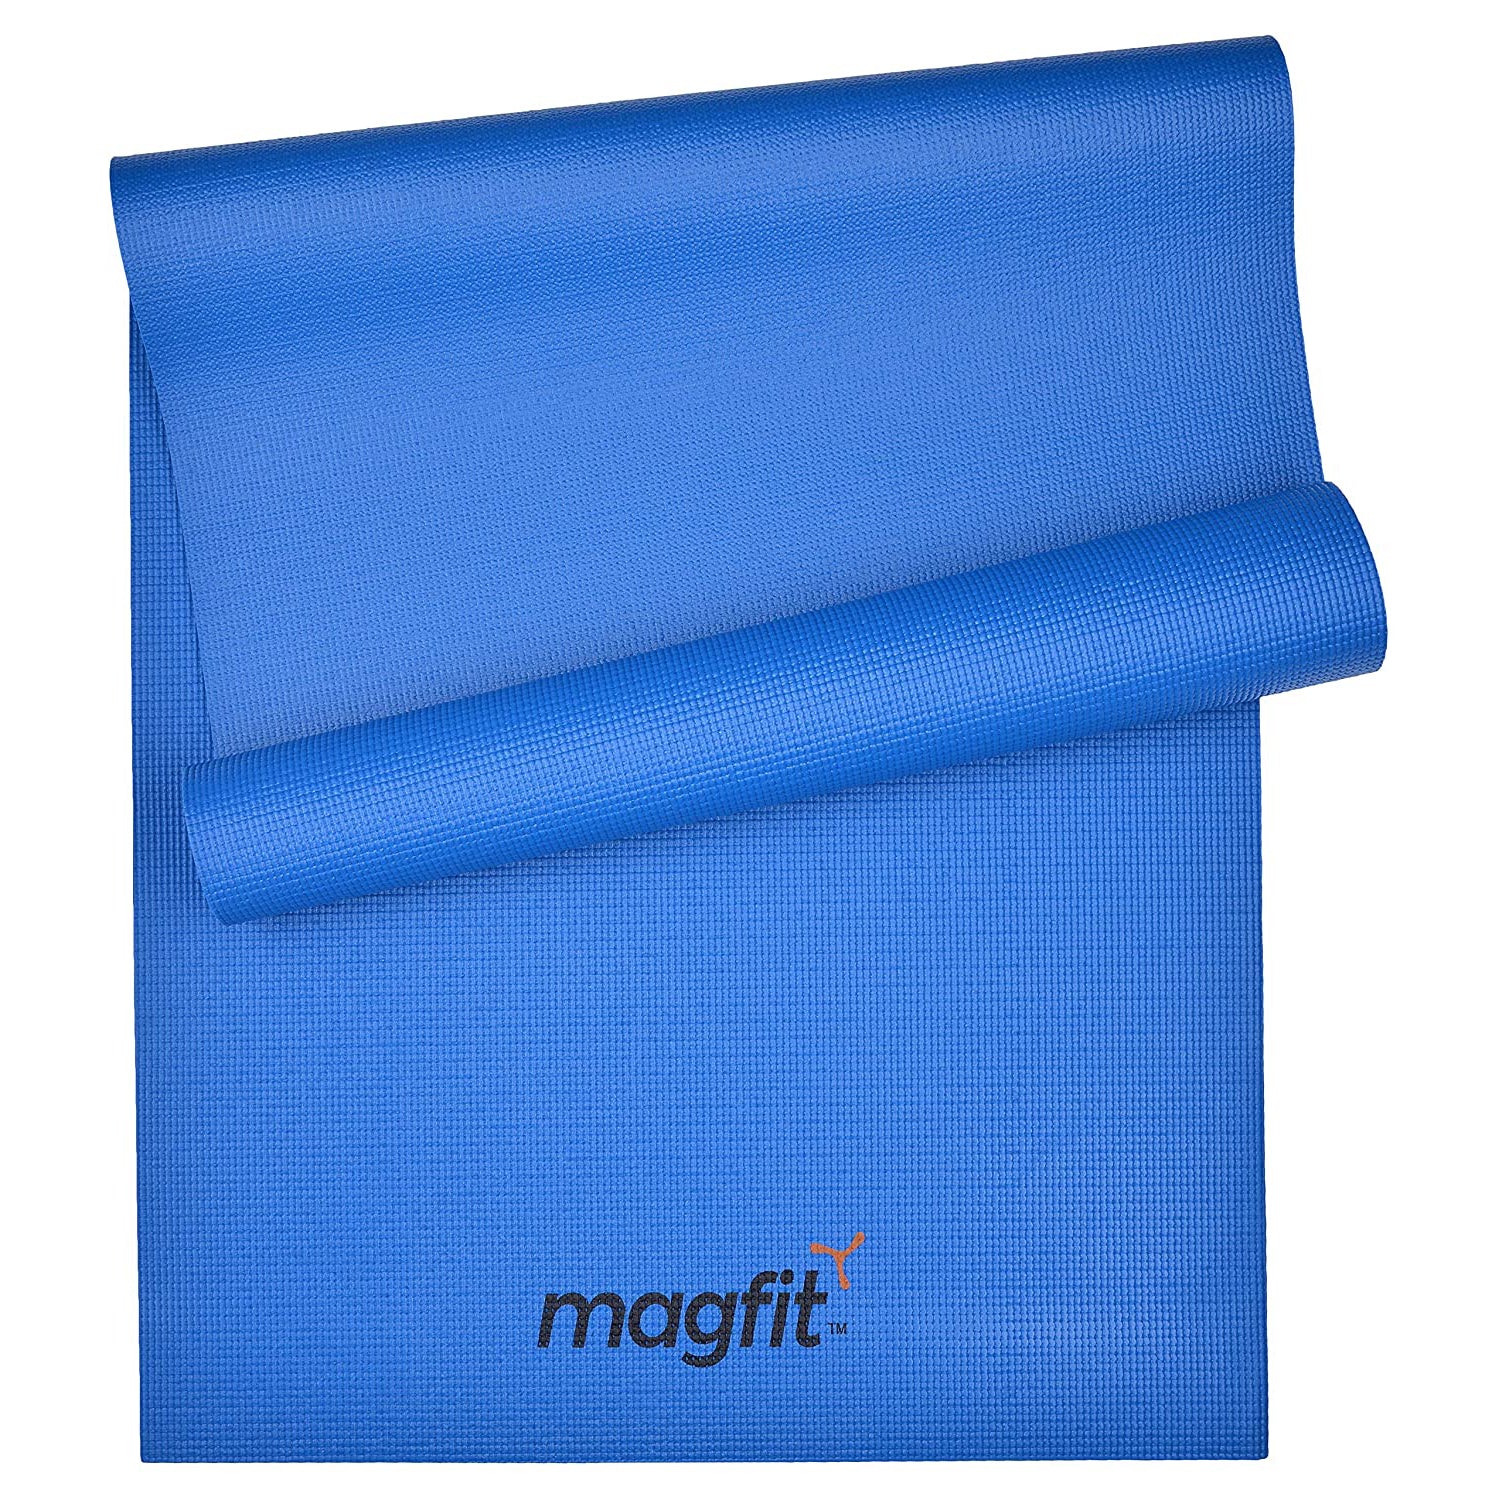 MagFit Yoga Mat 4 mm Blue - Best Price online Prokicksports.com